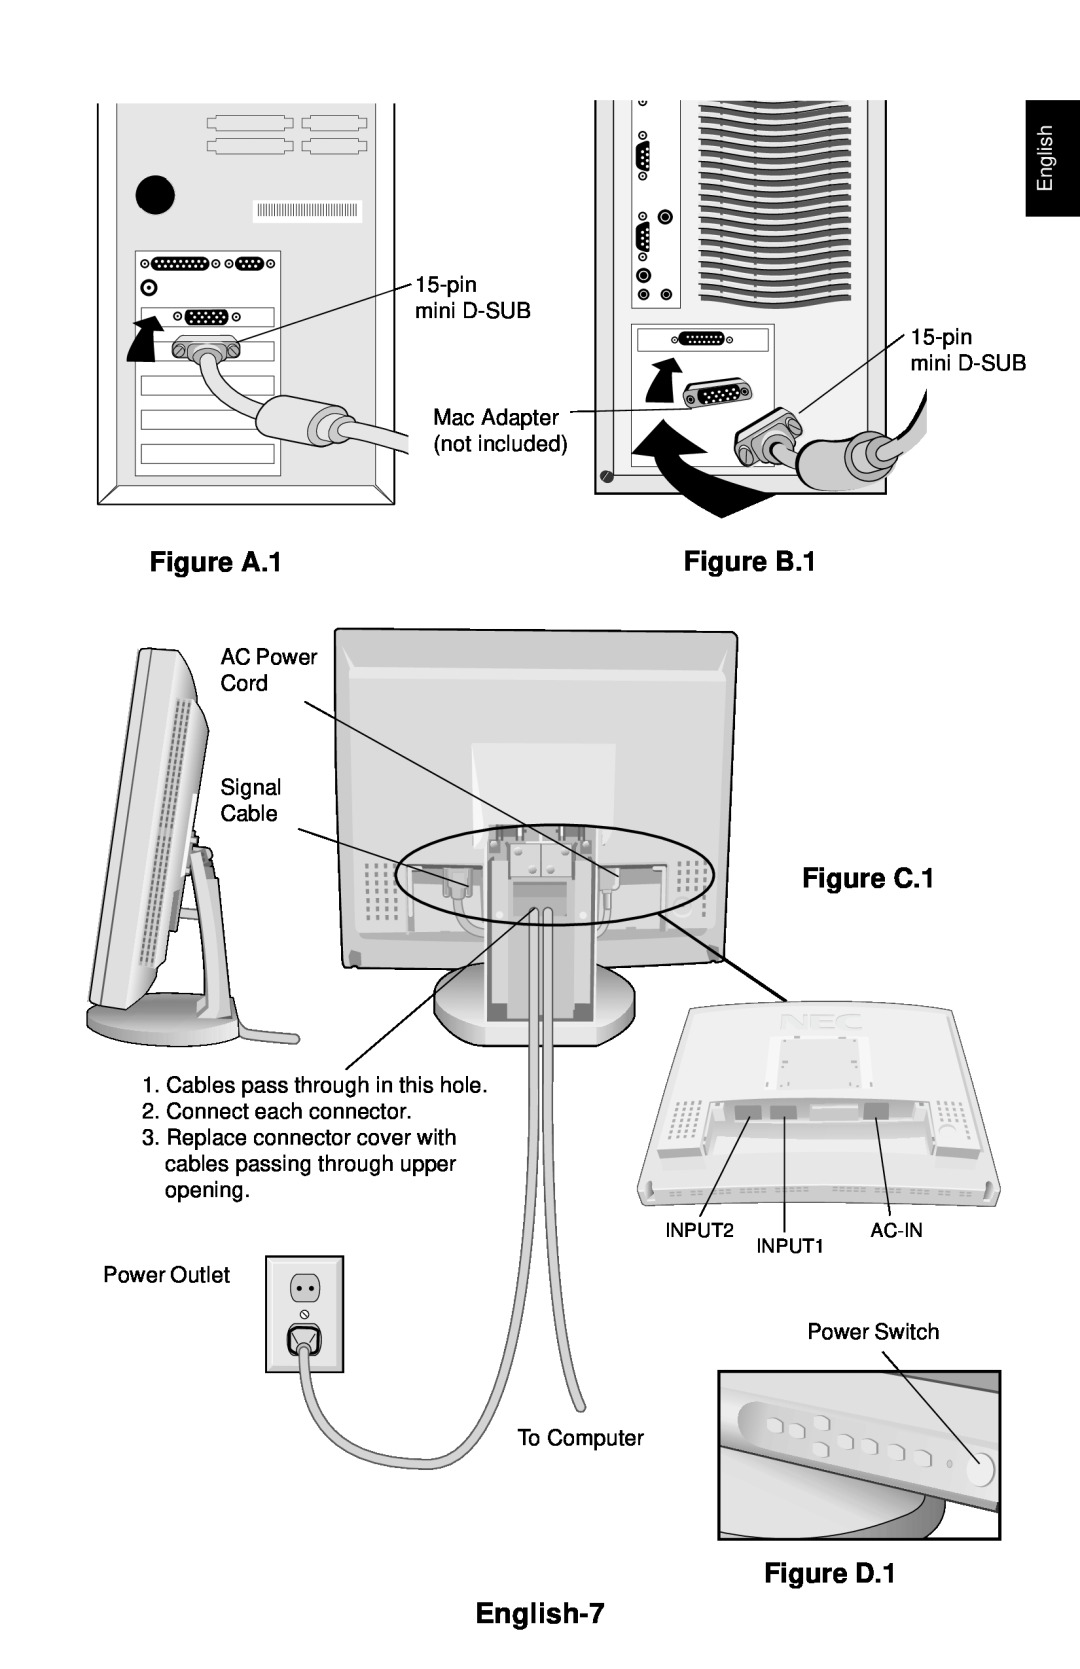 NEC LCD1830 user manual Figure A.1, Figure B.1, Figure C.1, Figure D.1, pin mini D-SUB Mac Adapter not included, English 